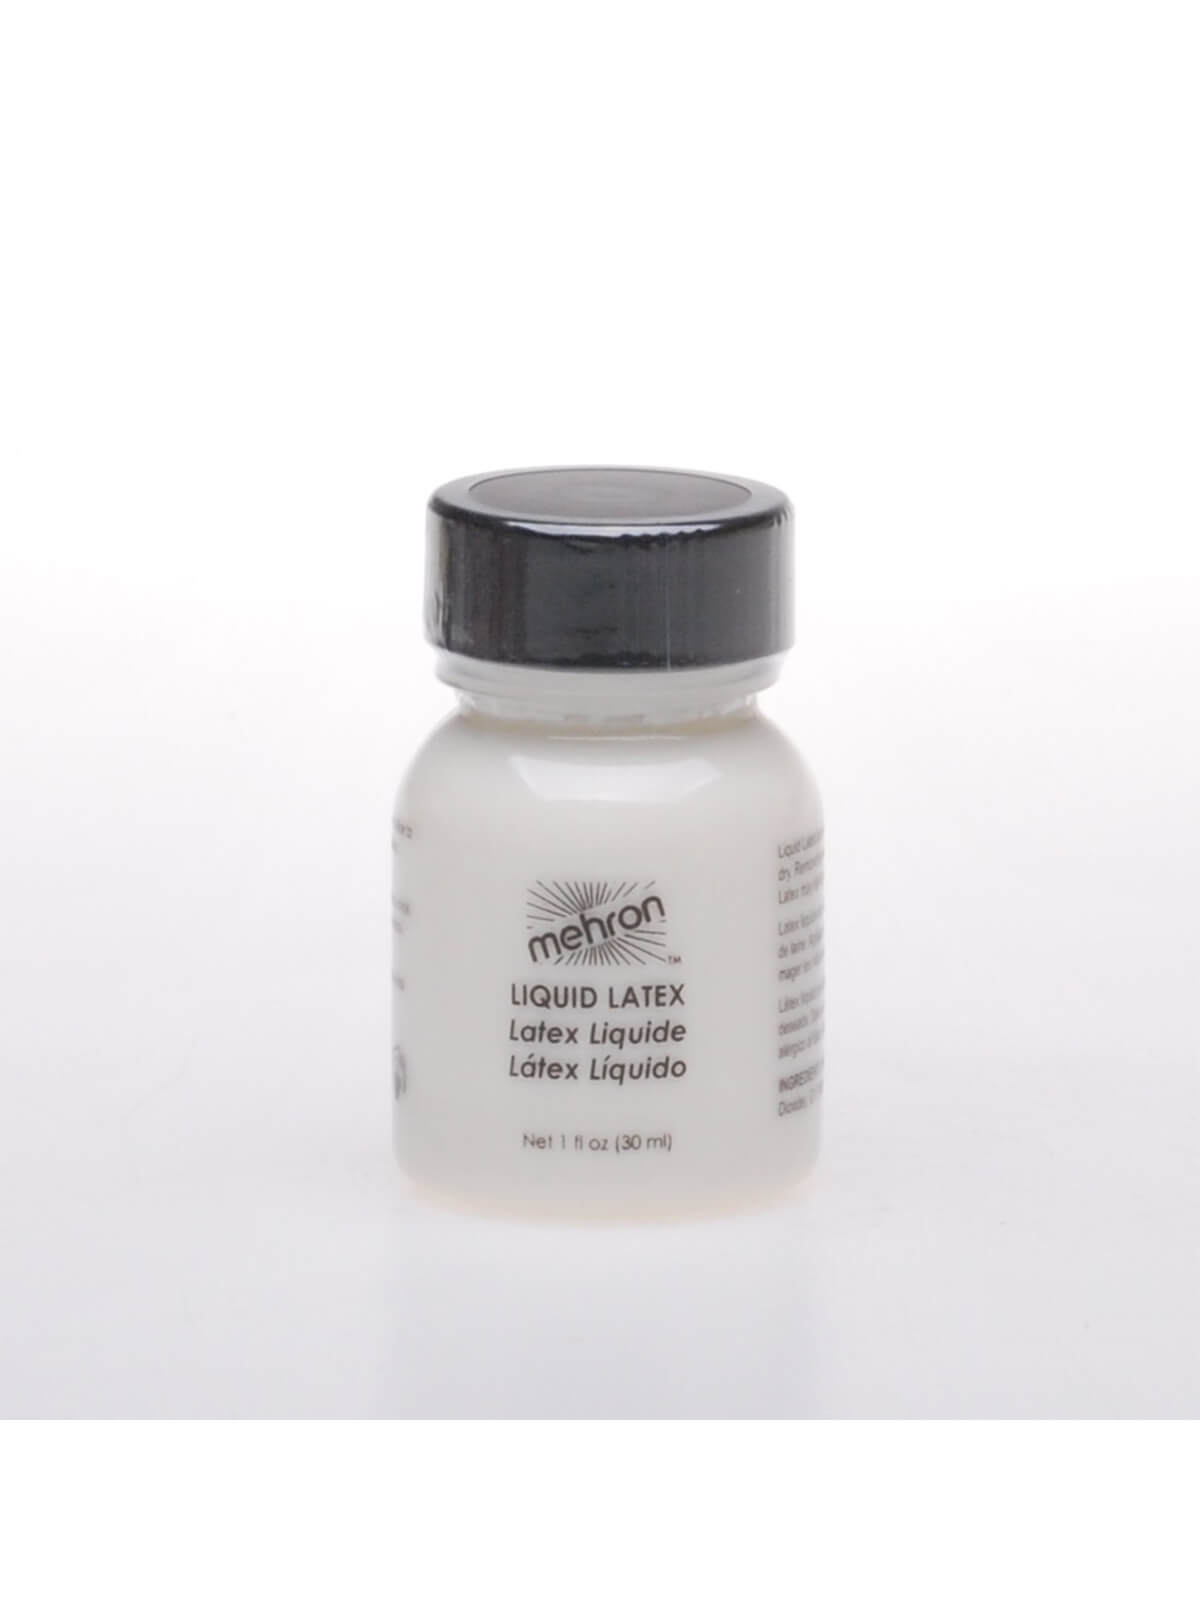 Liquid Latex - Clear w/ brush (30 ml)